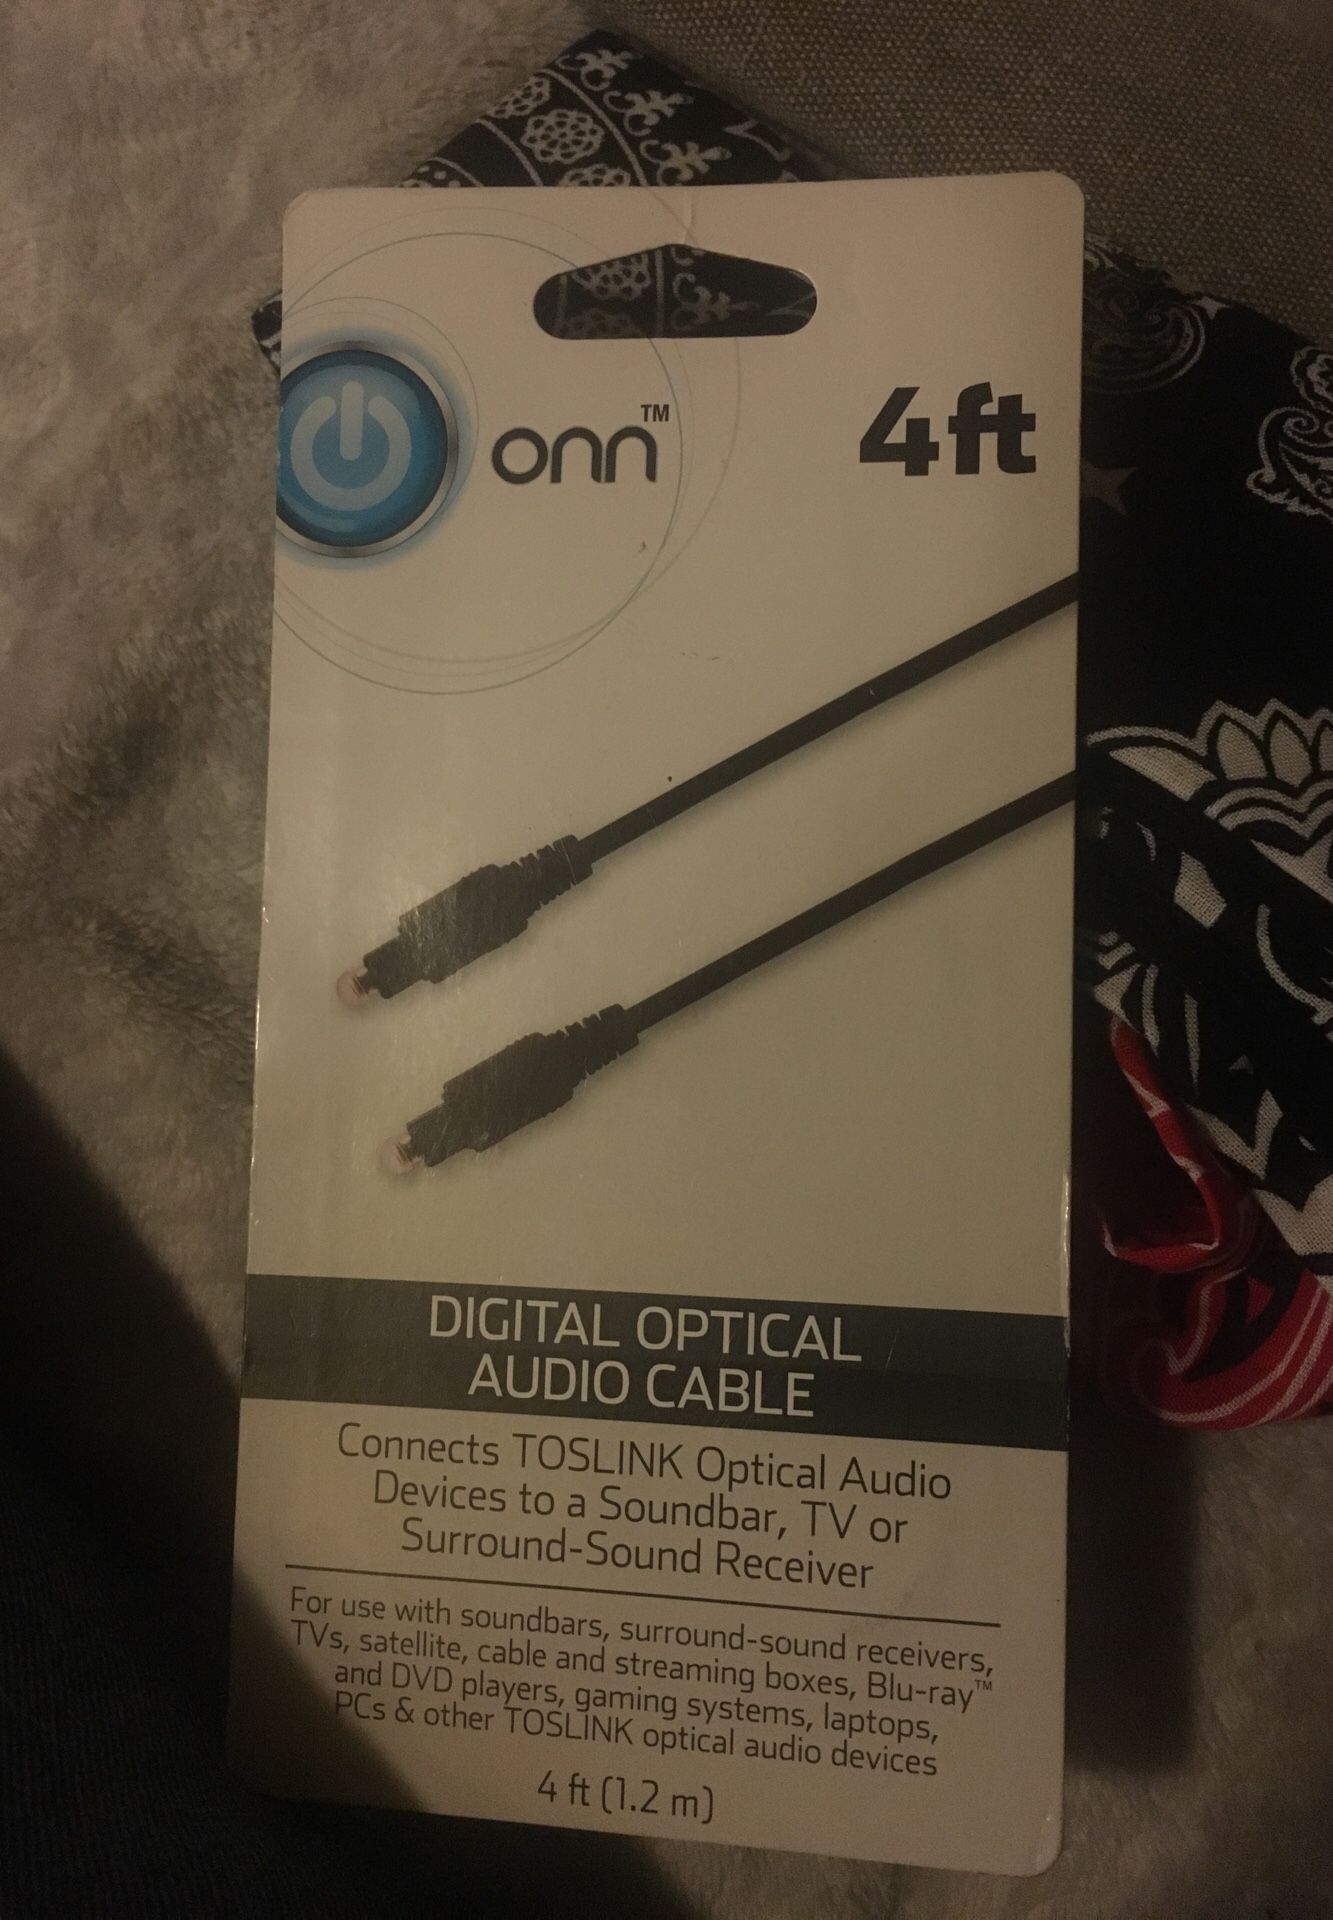 Digital optical audio cable